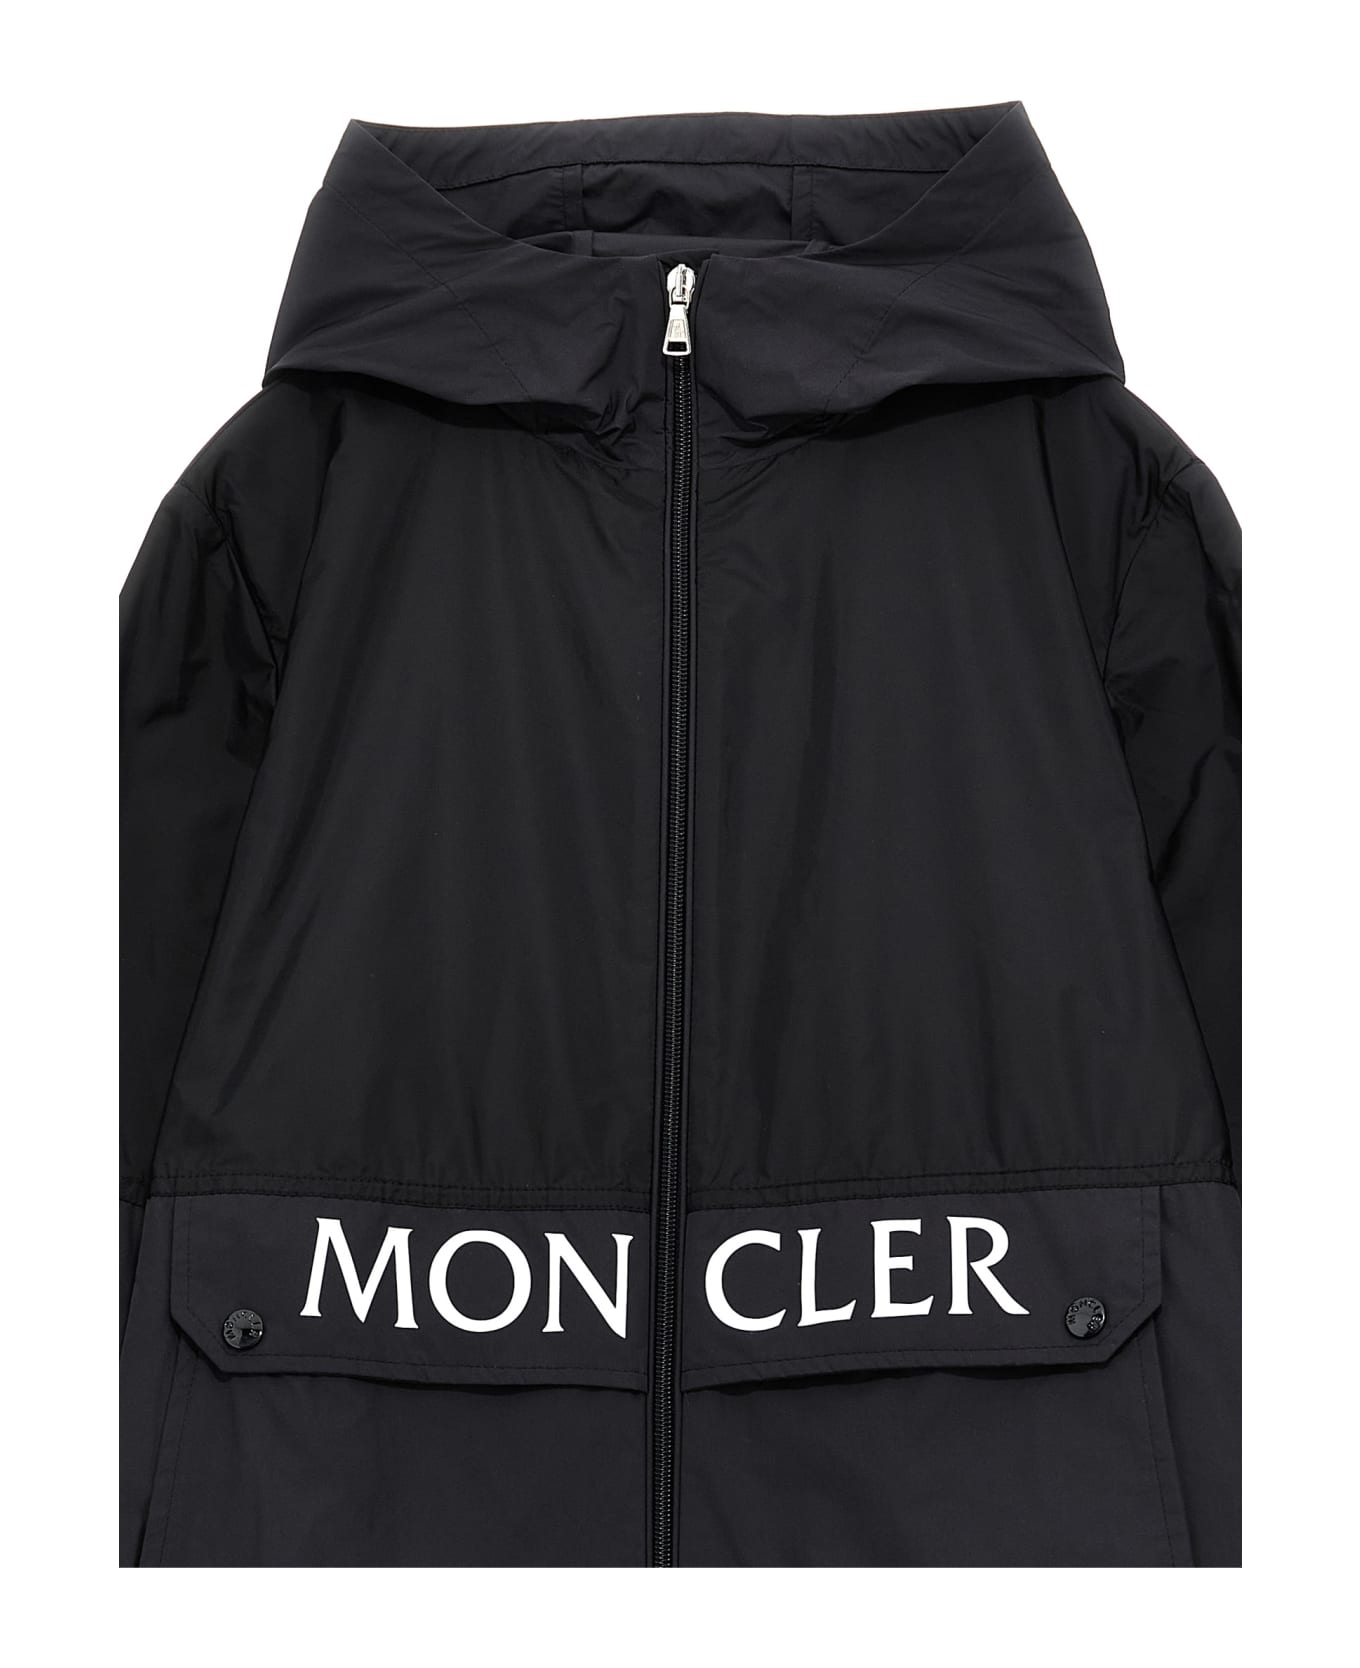 Moncler 'joly' Jacket - Black  